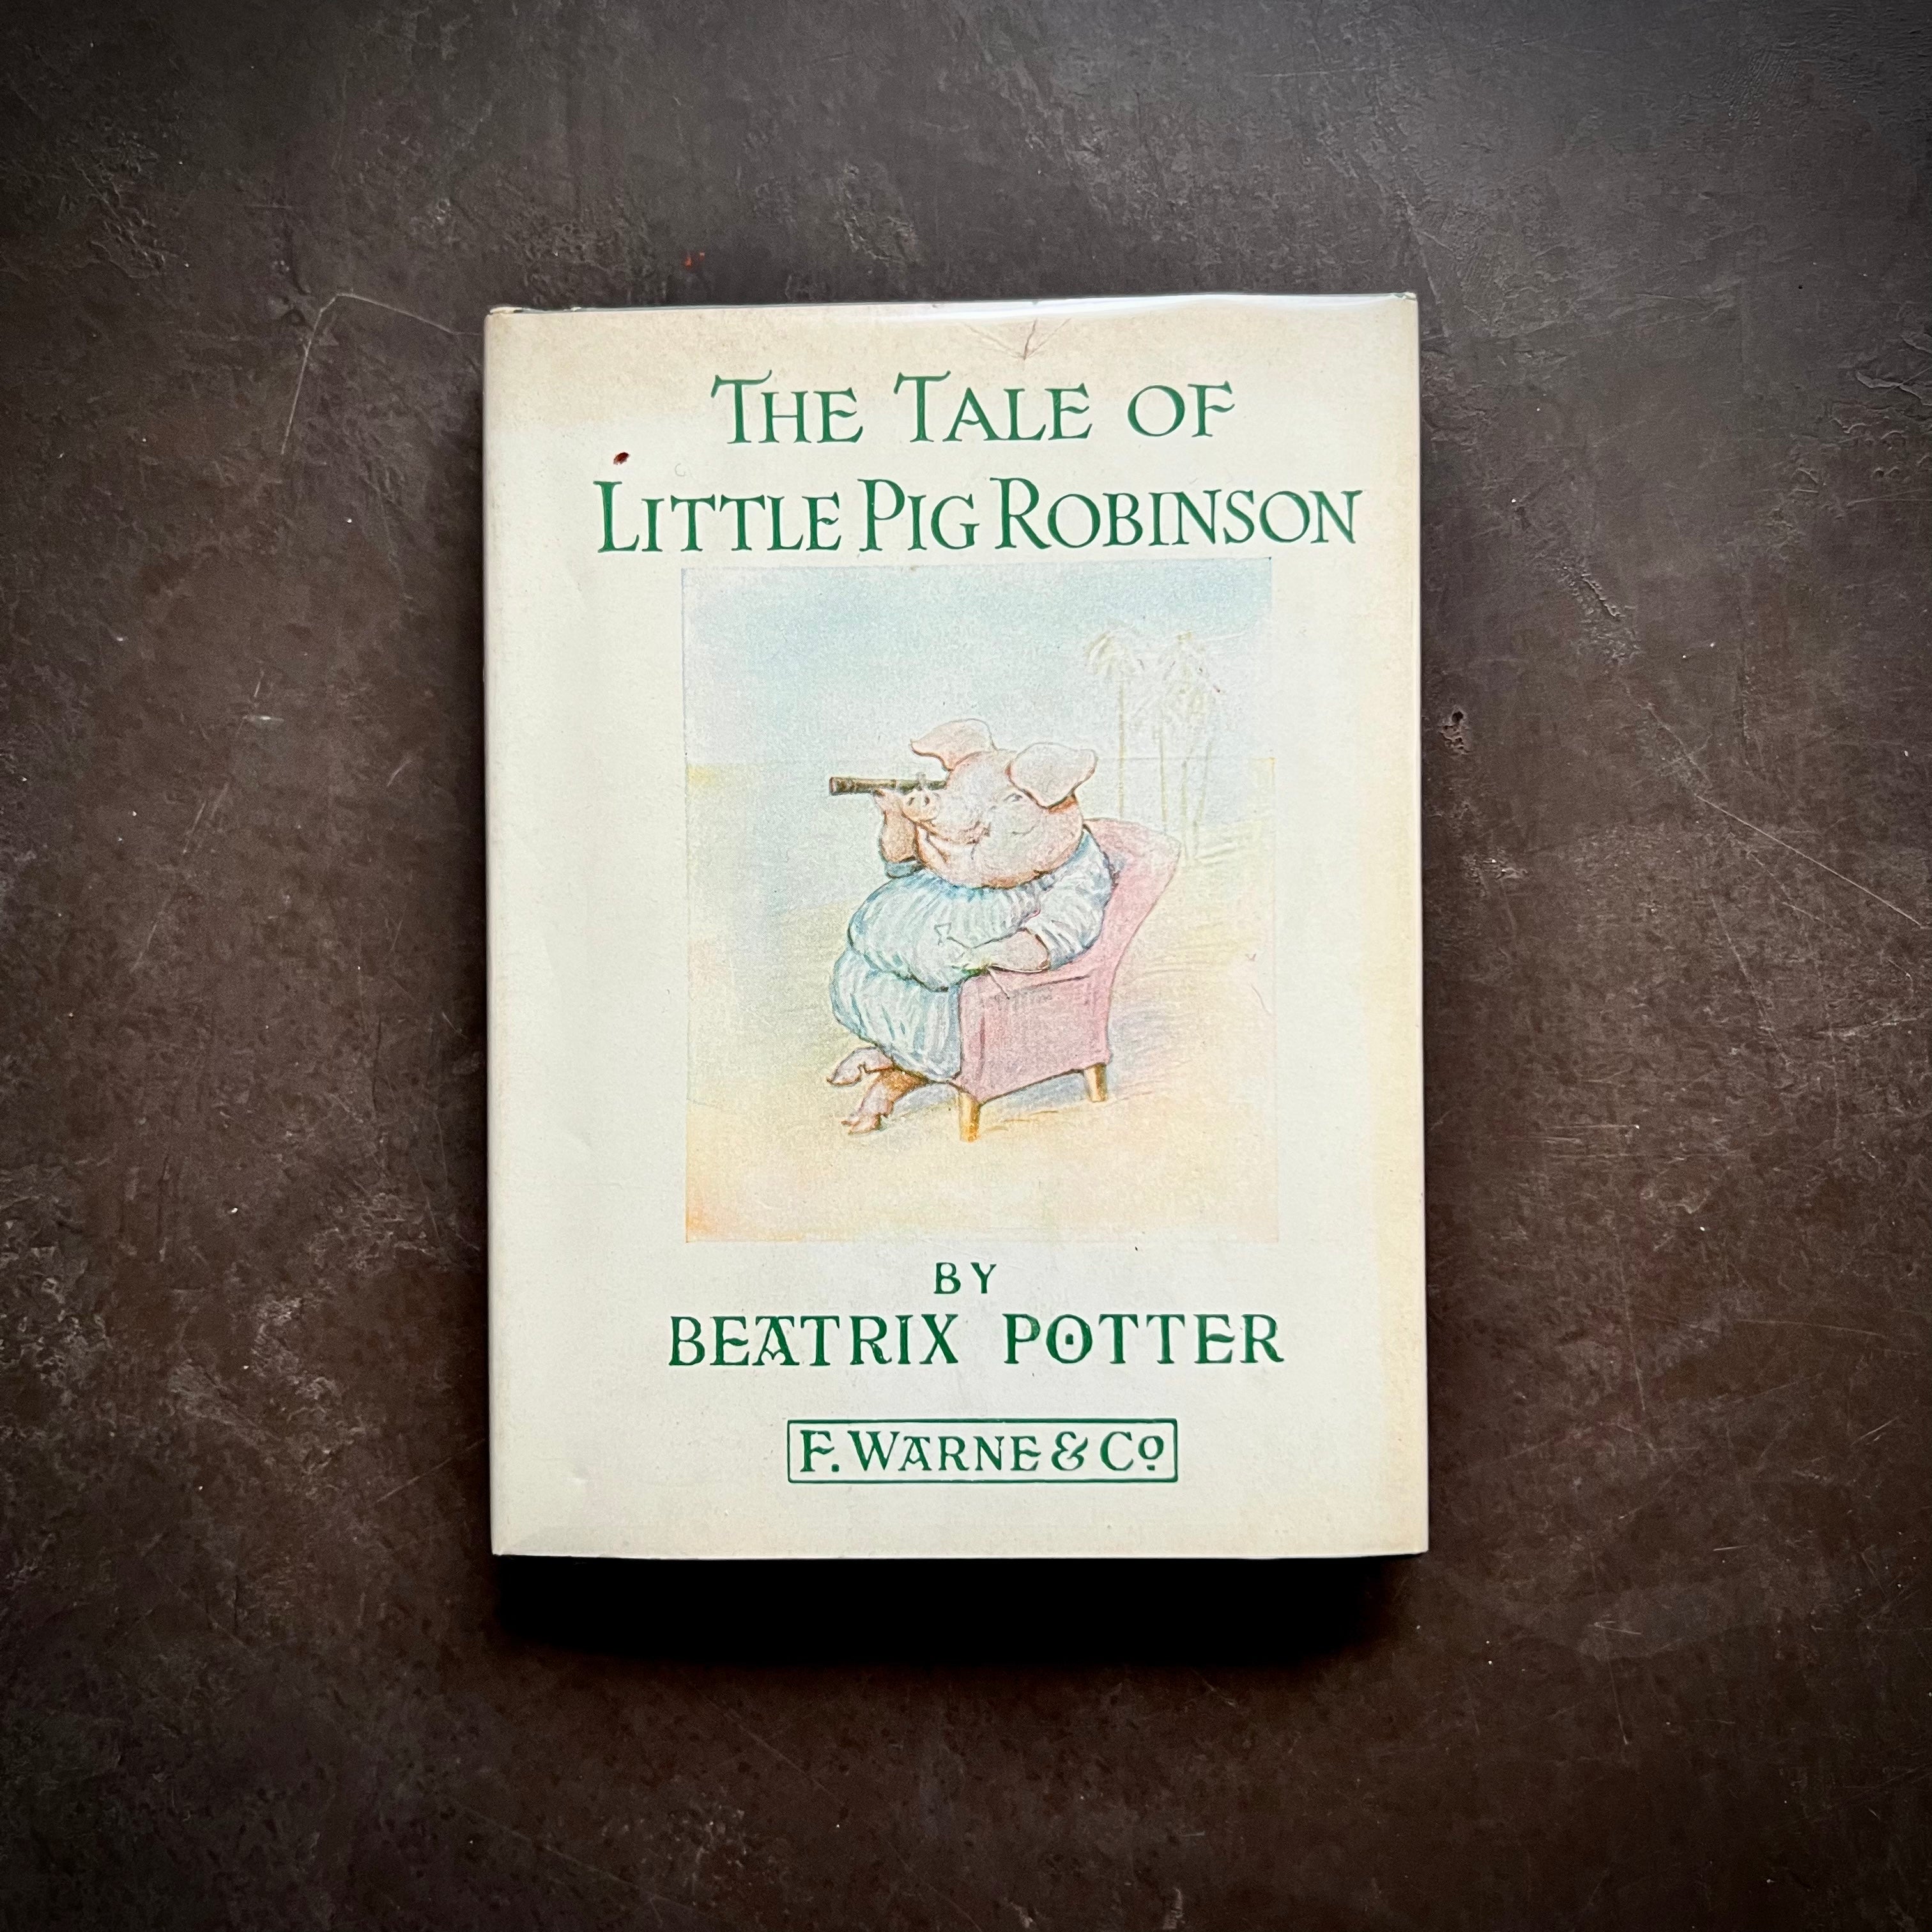 Timeless Tales of Beatrix Potter